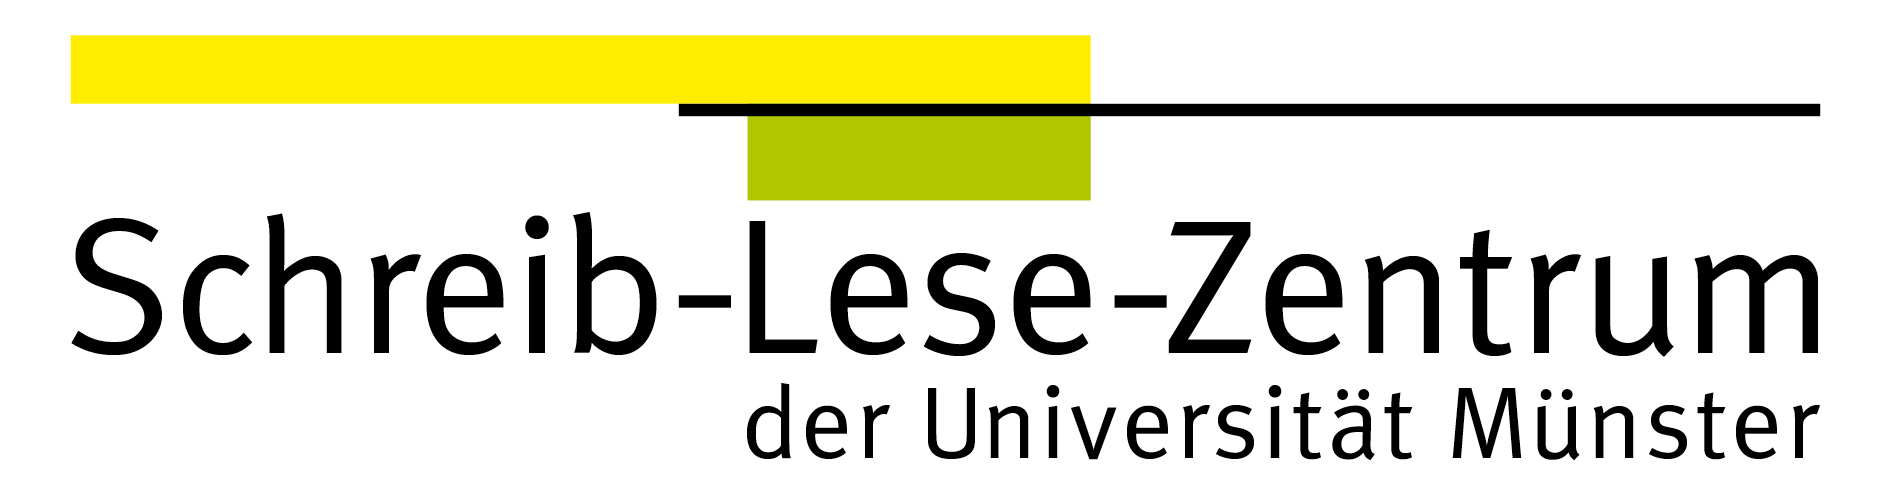 Logo Schreib-lese-zentrum Mituni Rgb